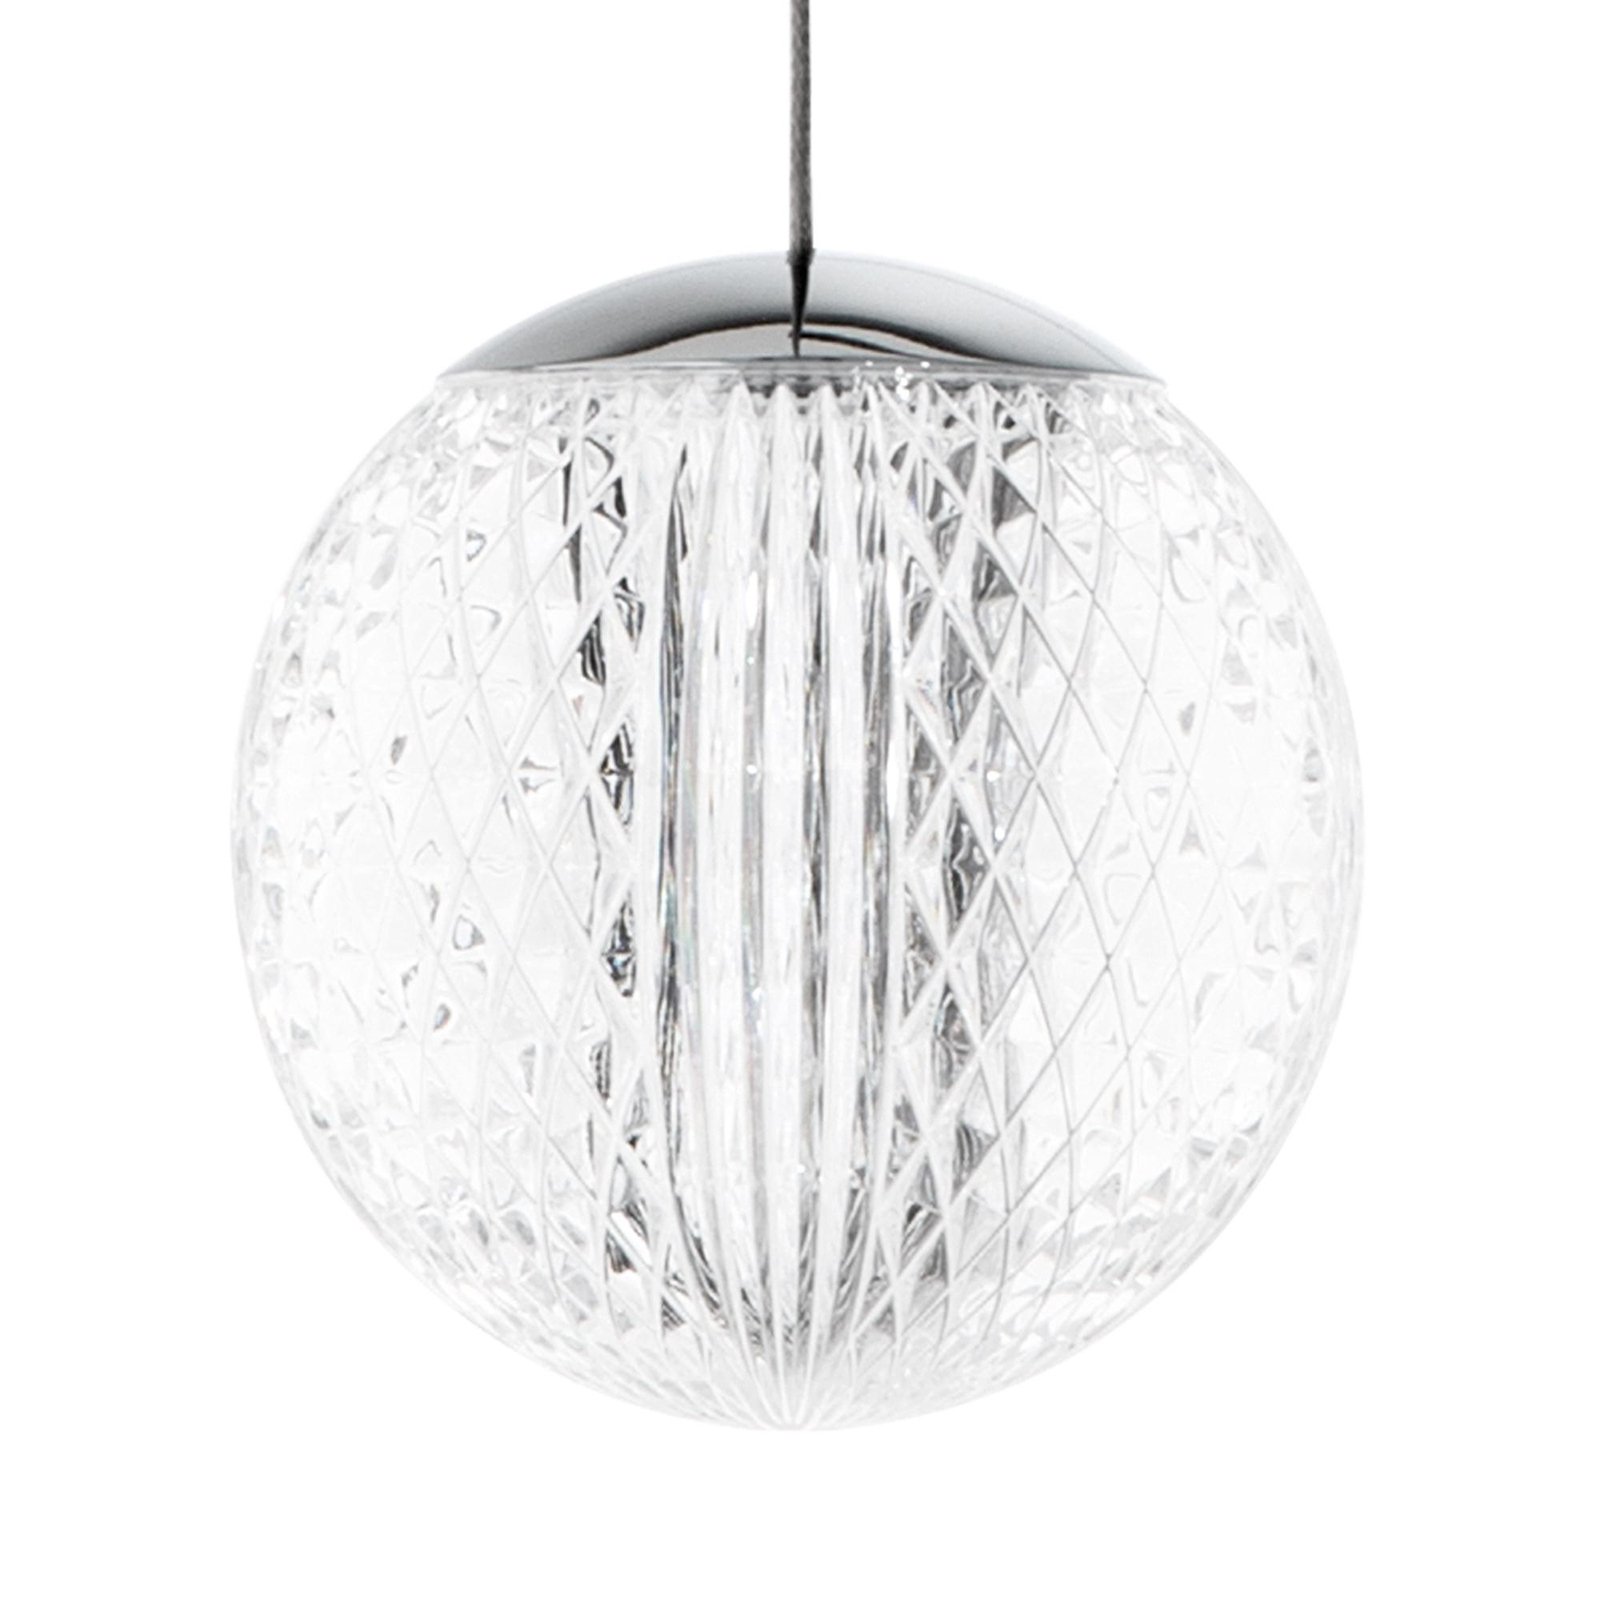 Ideal Lux hänglampa Diamond 5 lampor, kromfärgad/klar